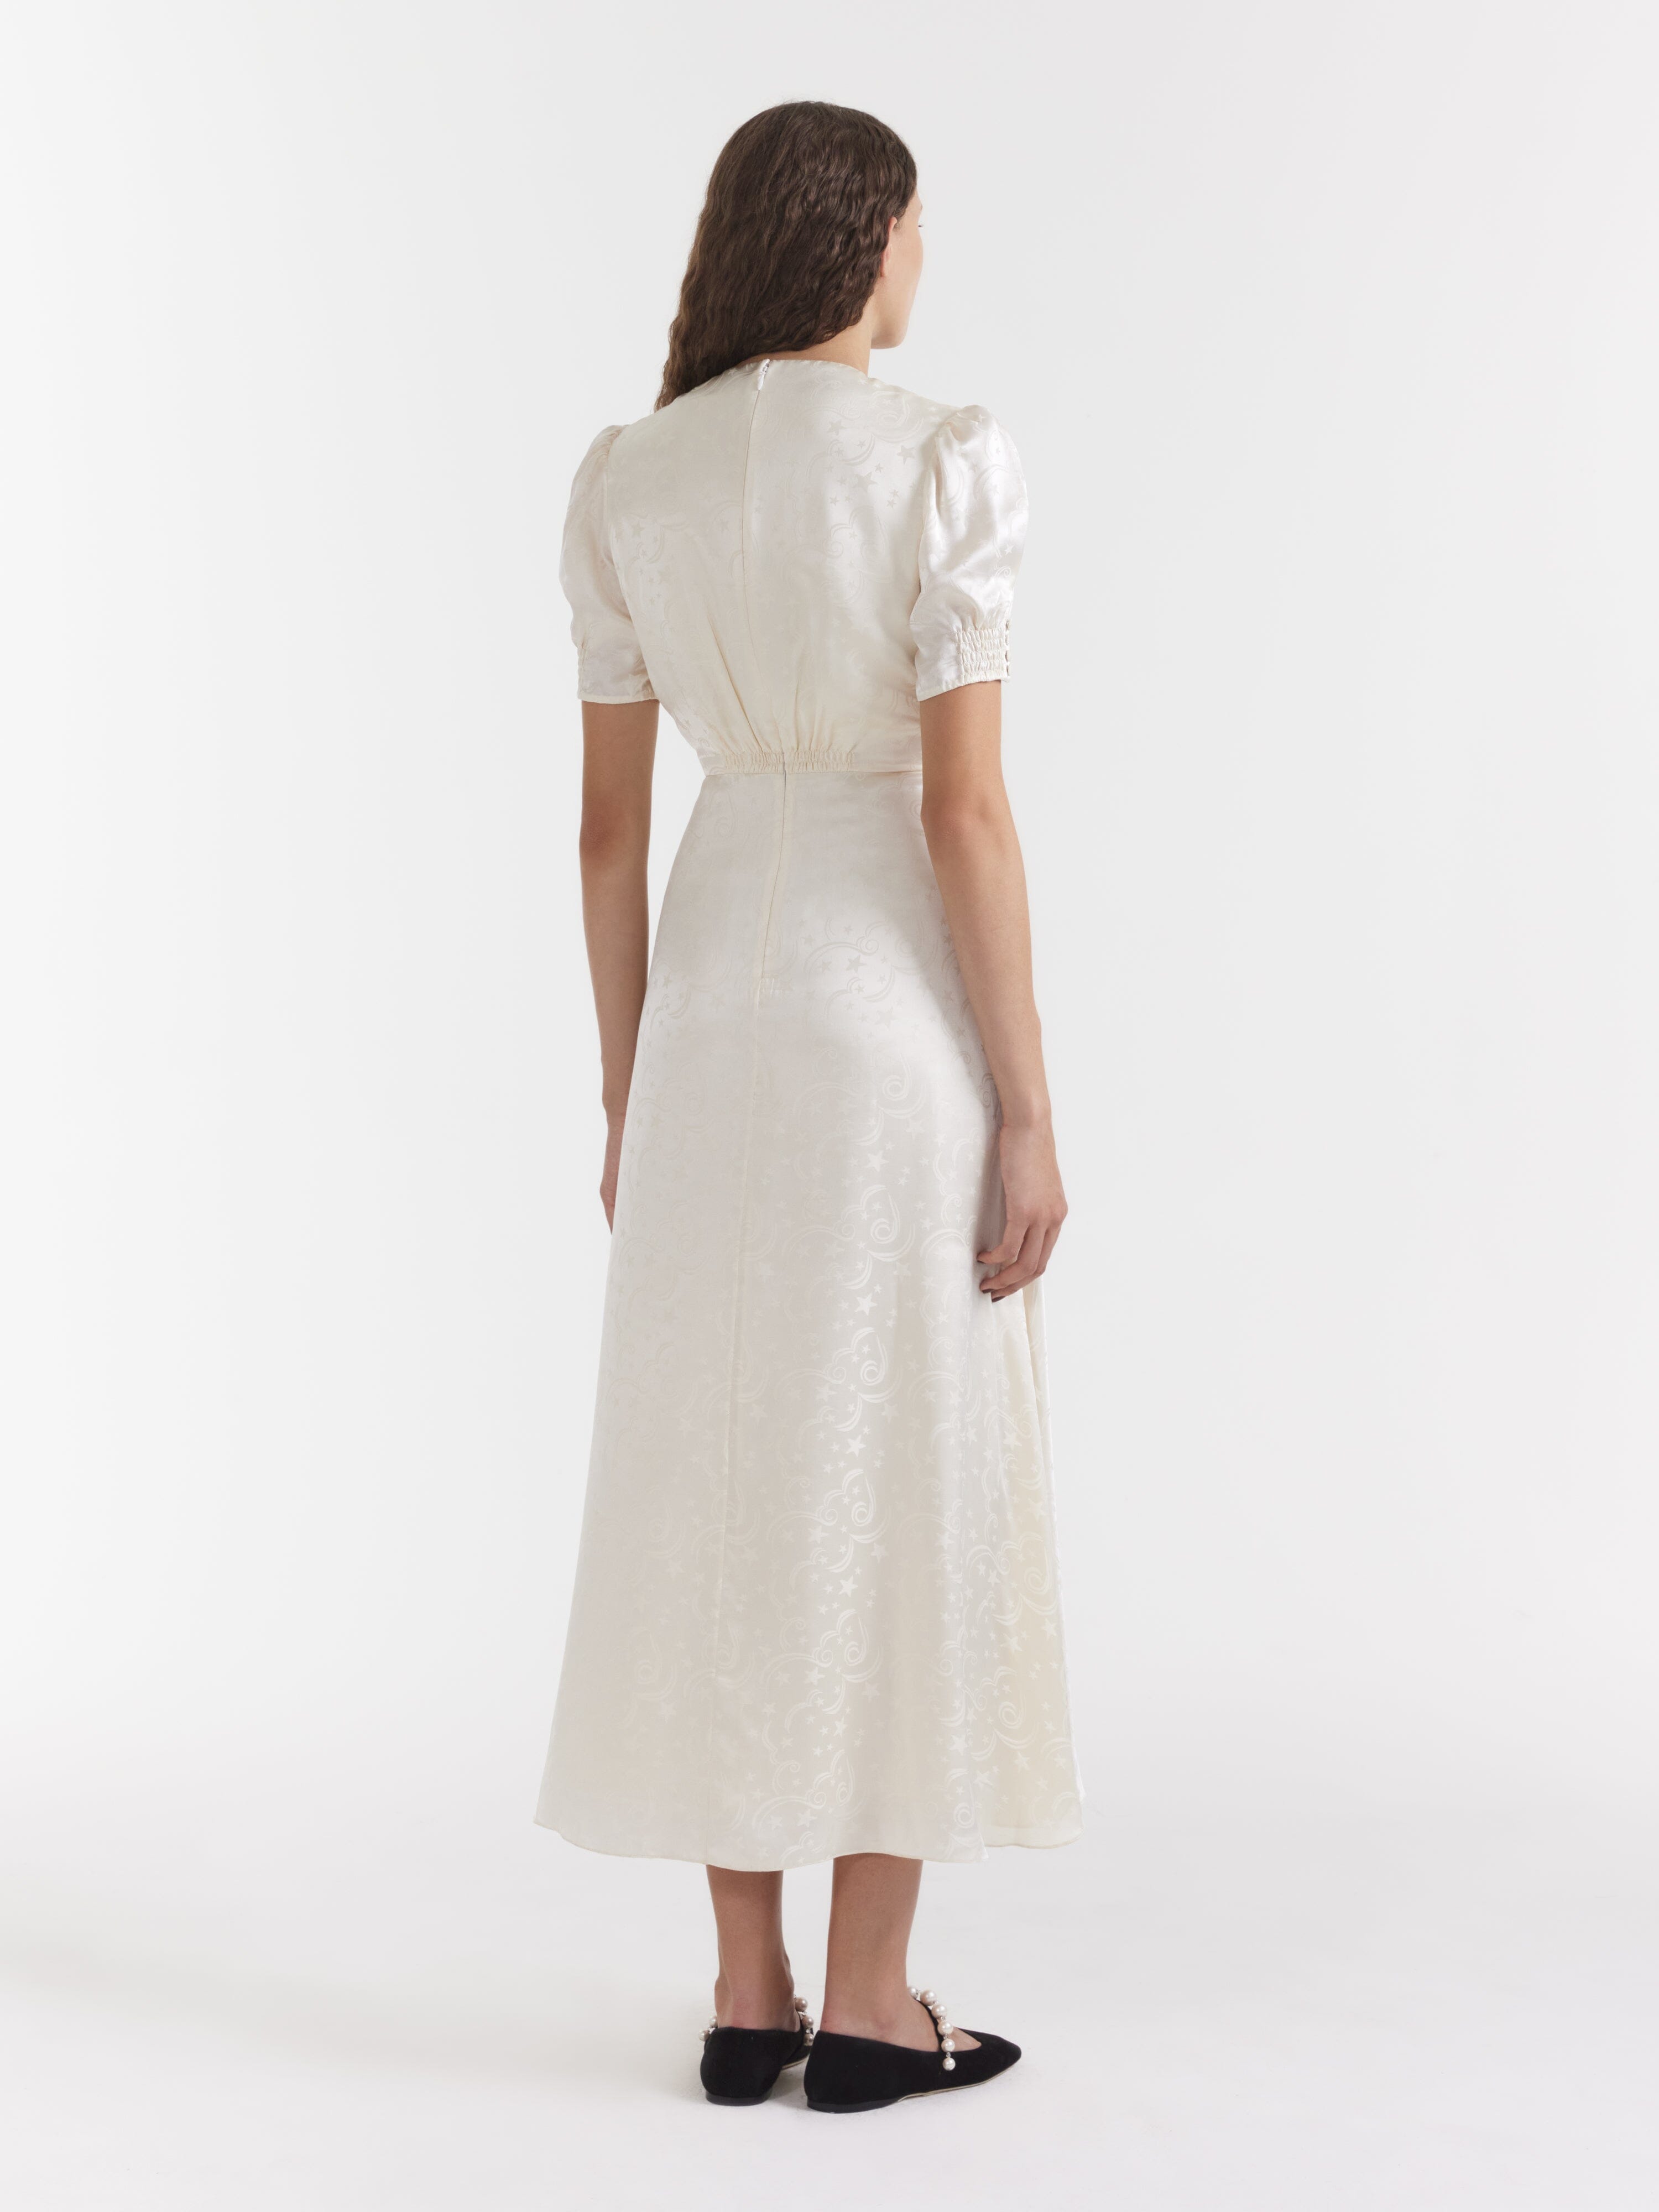 Venyx Lea Long Dress in Tusk Moonbeam Embroidery